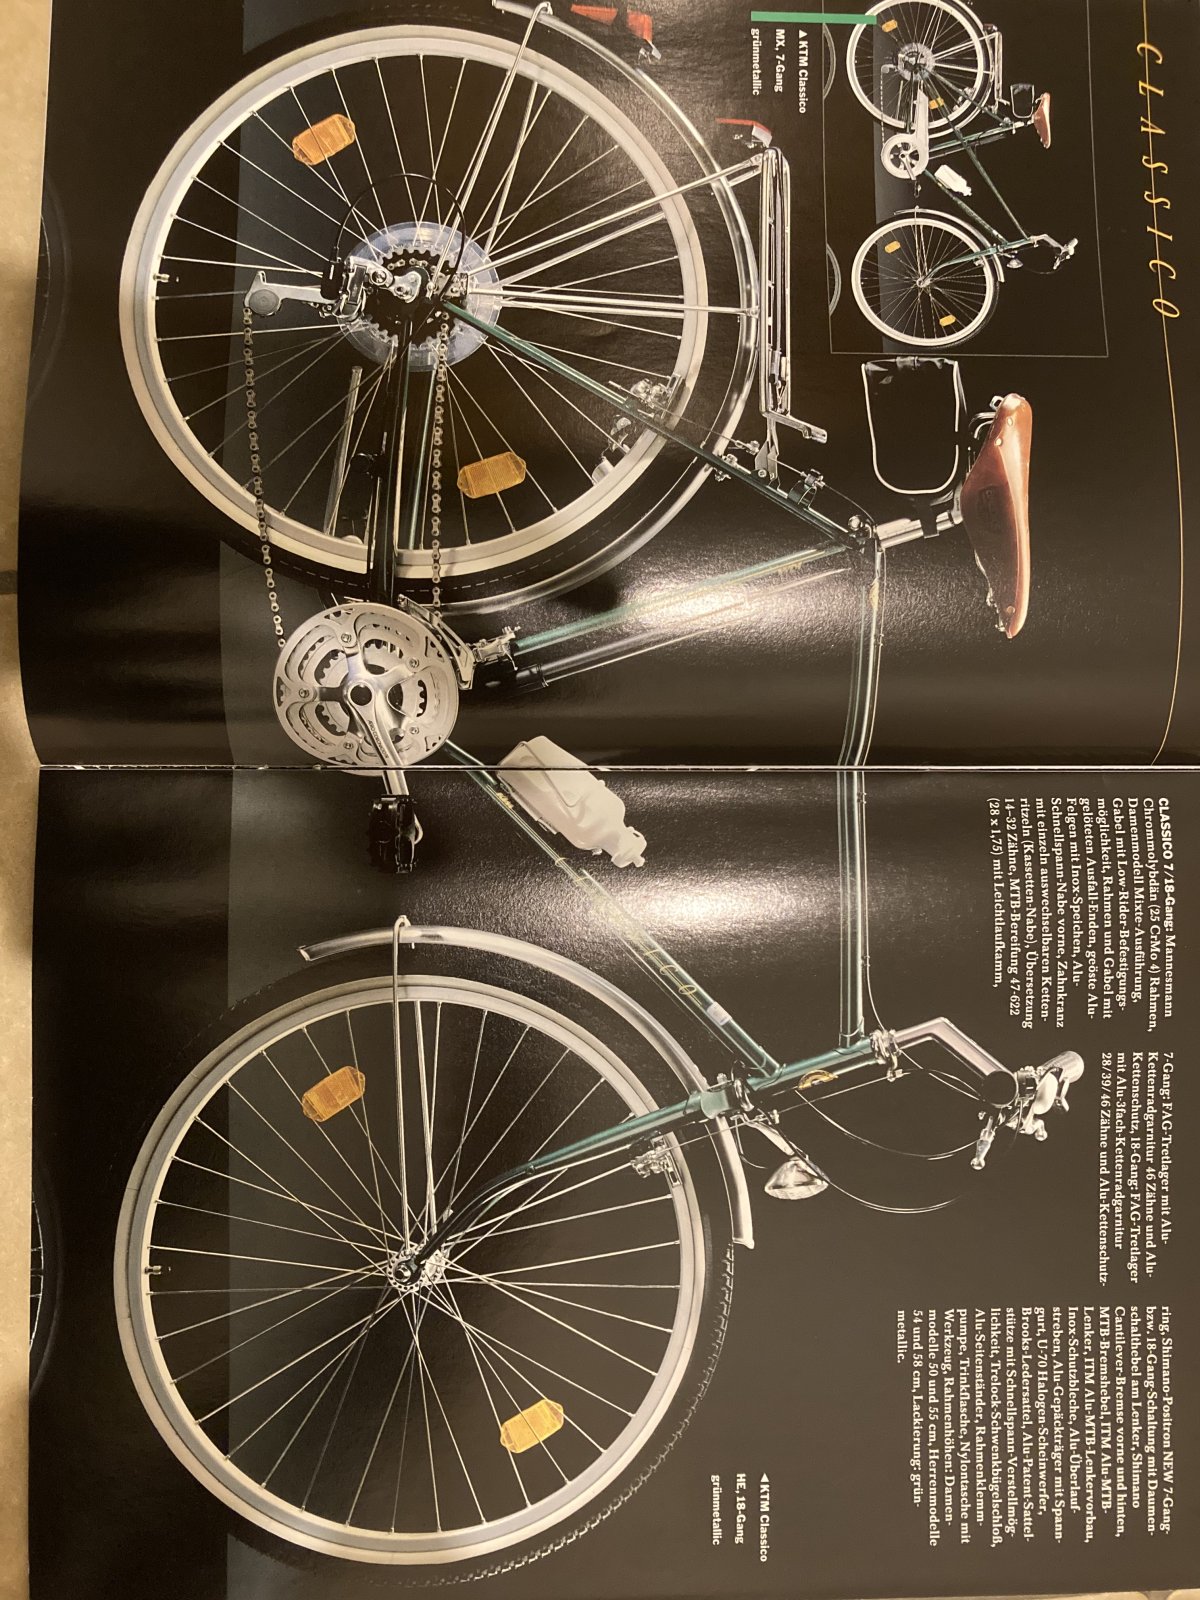 Suche - KTM Fahrrad-Kataloge 1990 -1992 | MTB-News.de | IBC Mountainbike  Forum